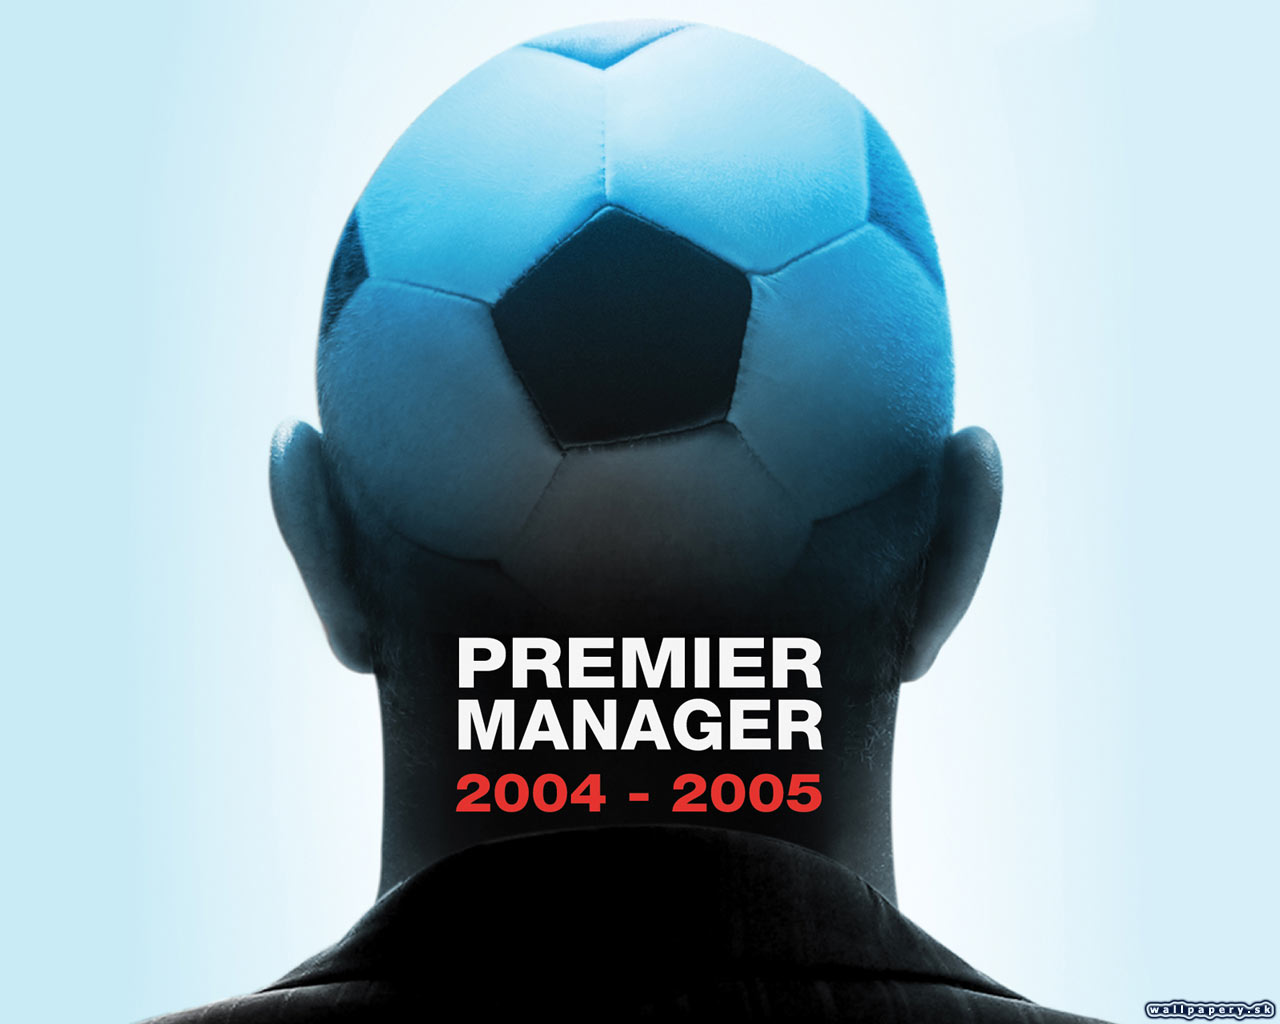 Premier Manager 2004 - 2005 - wallpaper 1